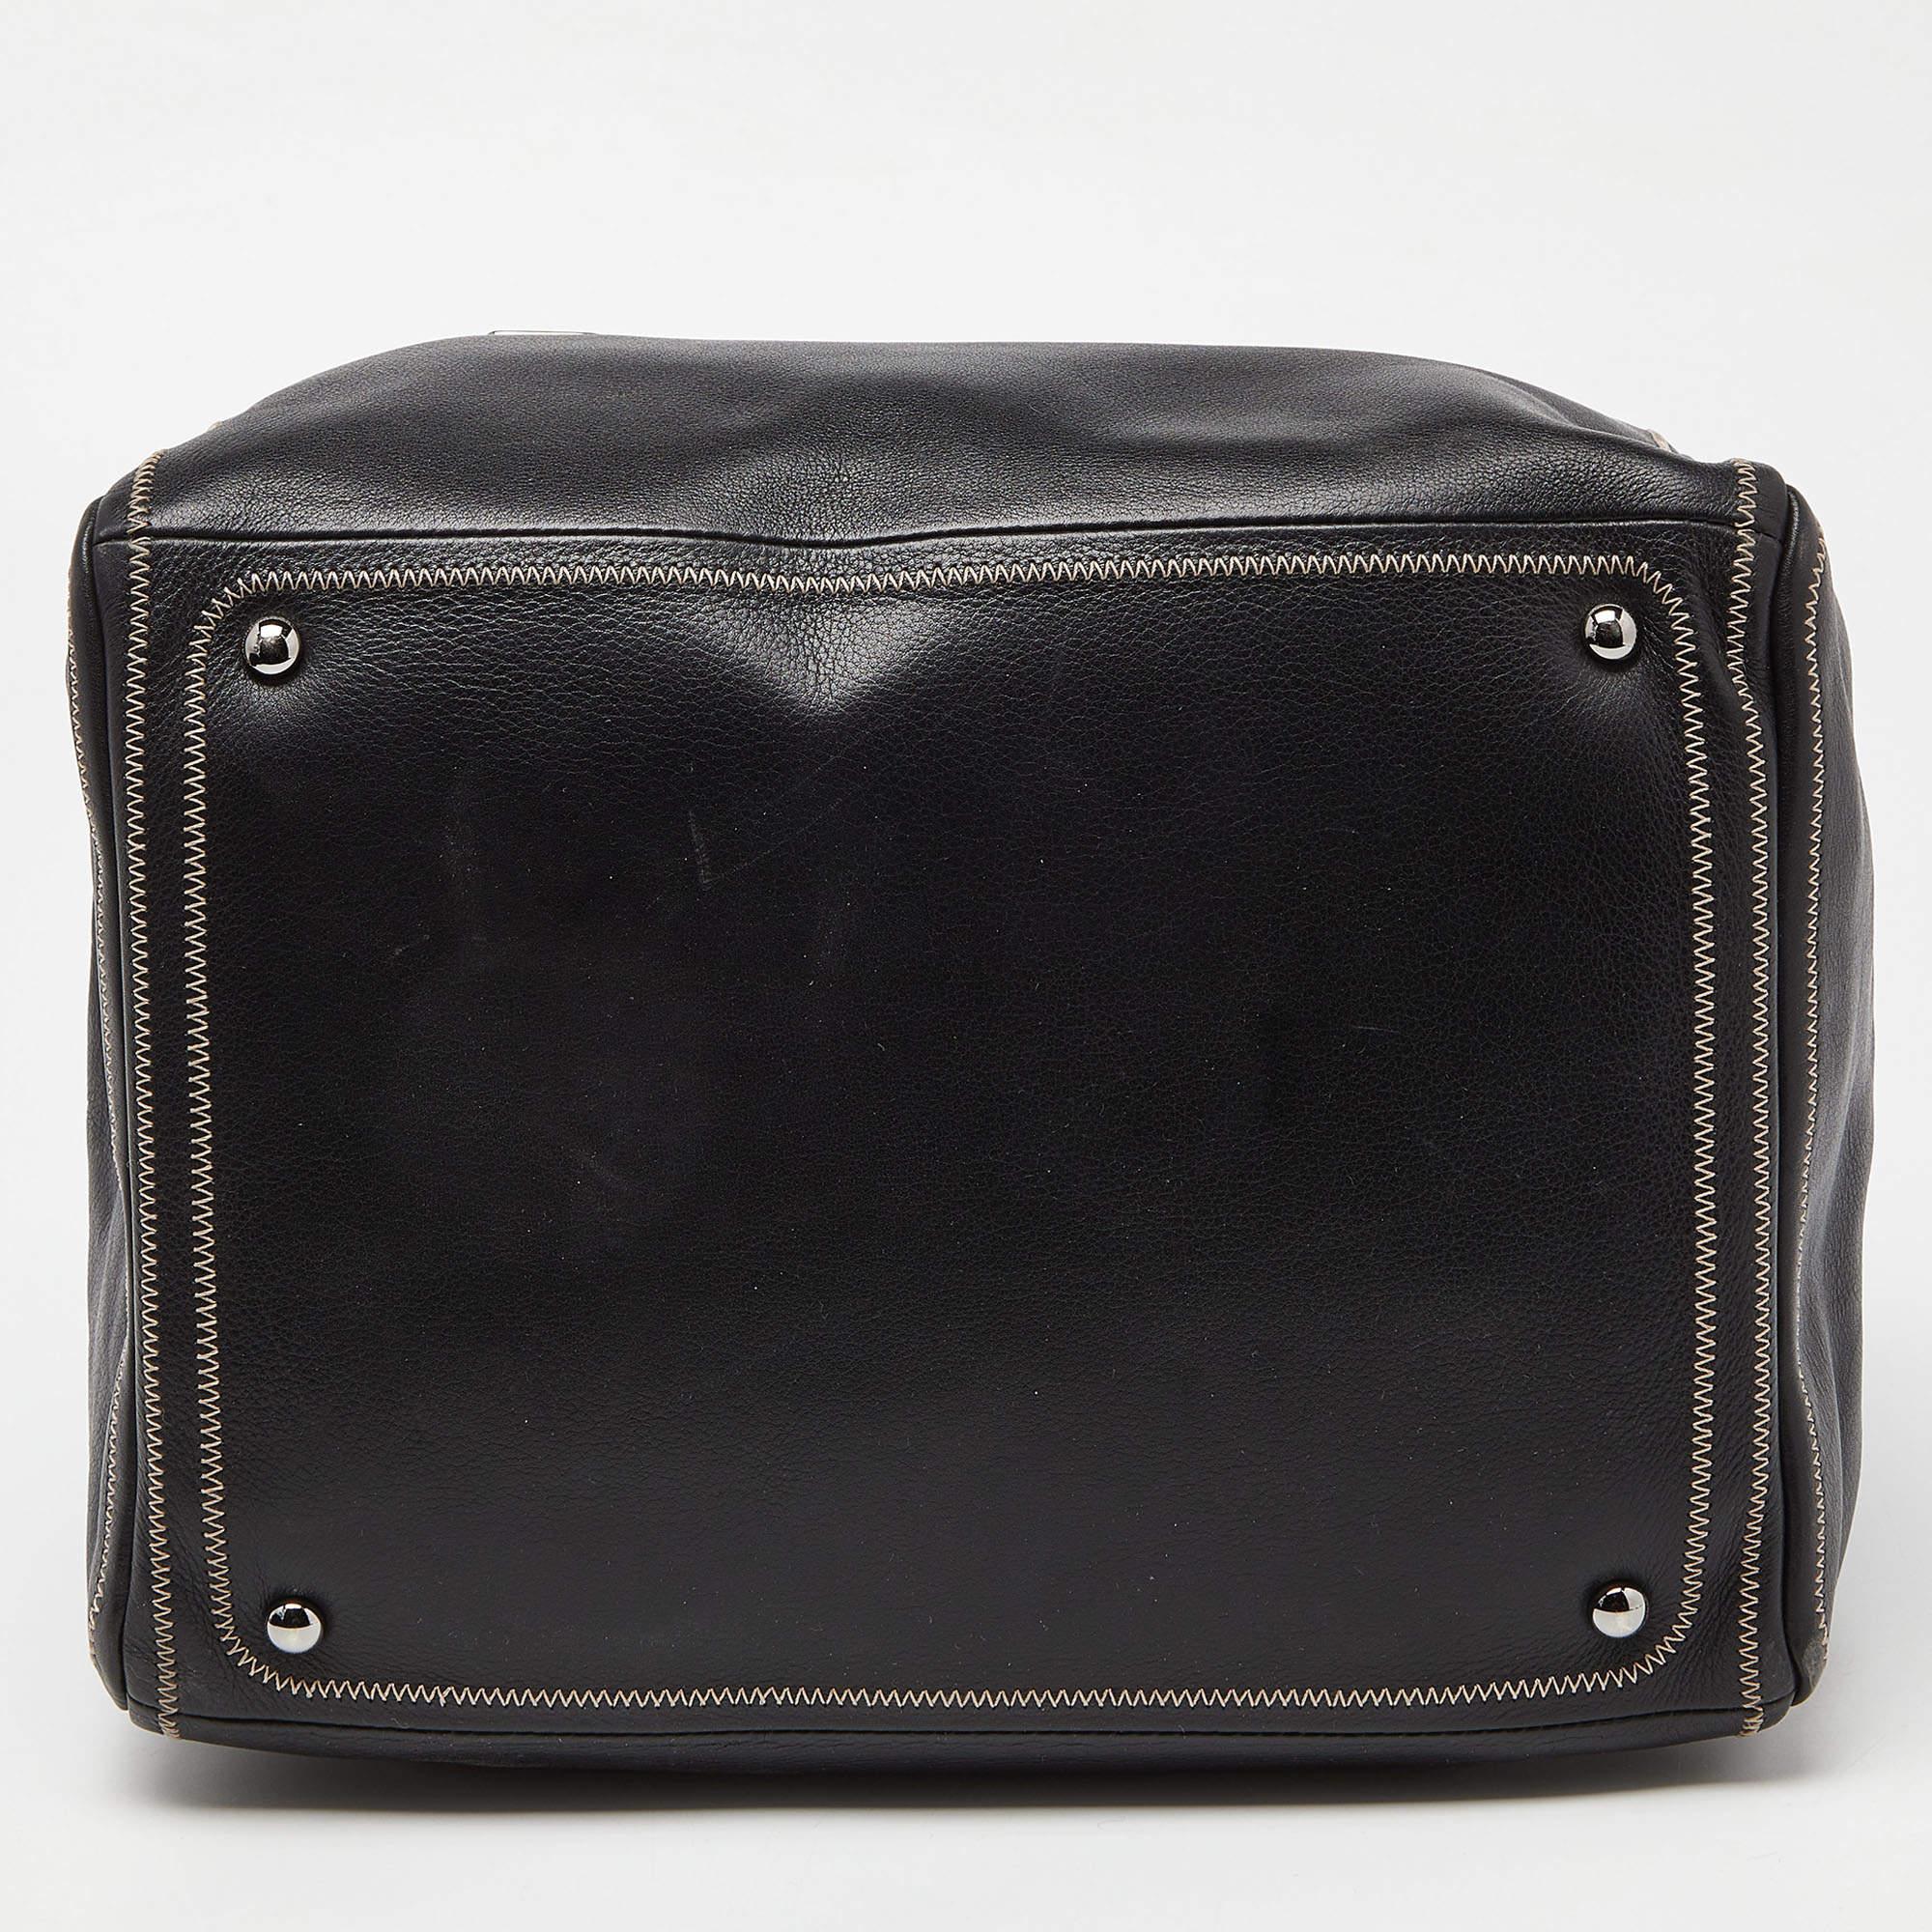 Chanel Black Leather CC Bowler Bag For Sale 8